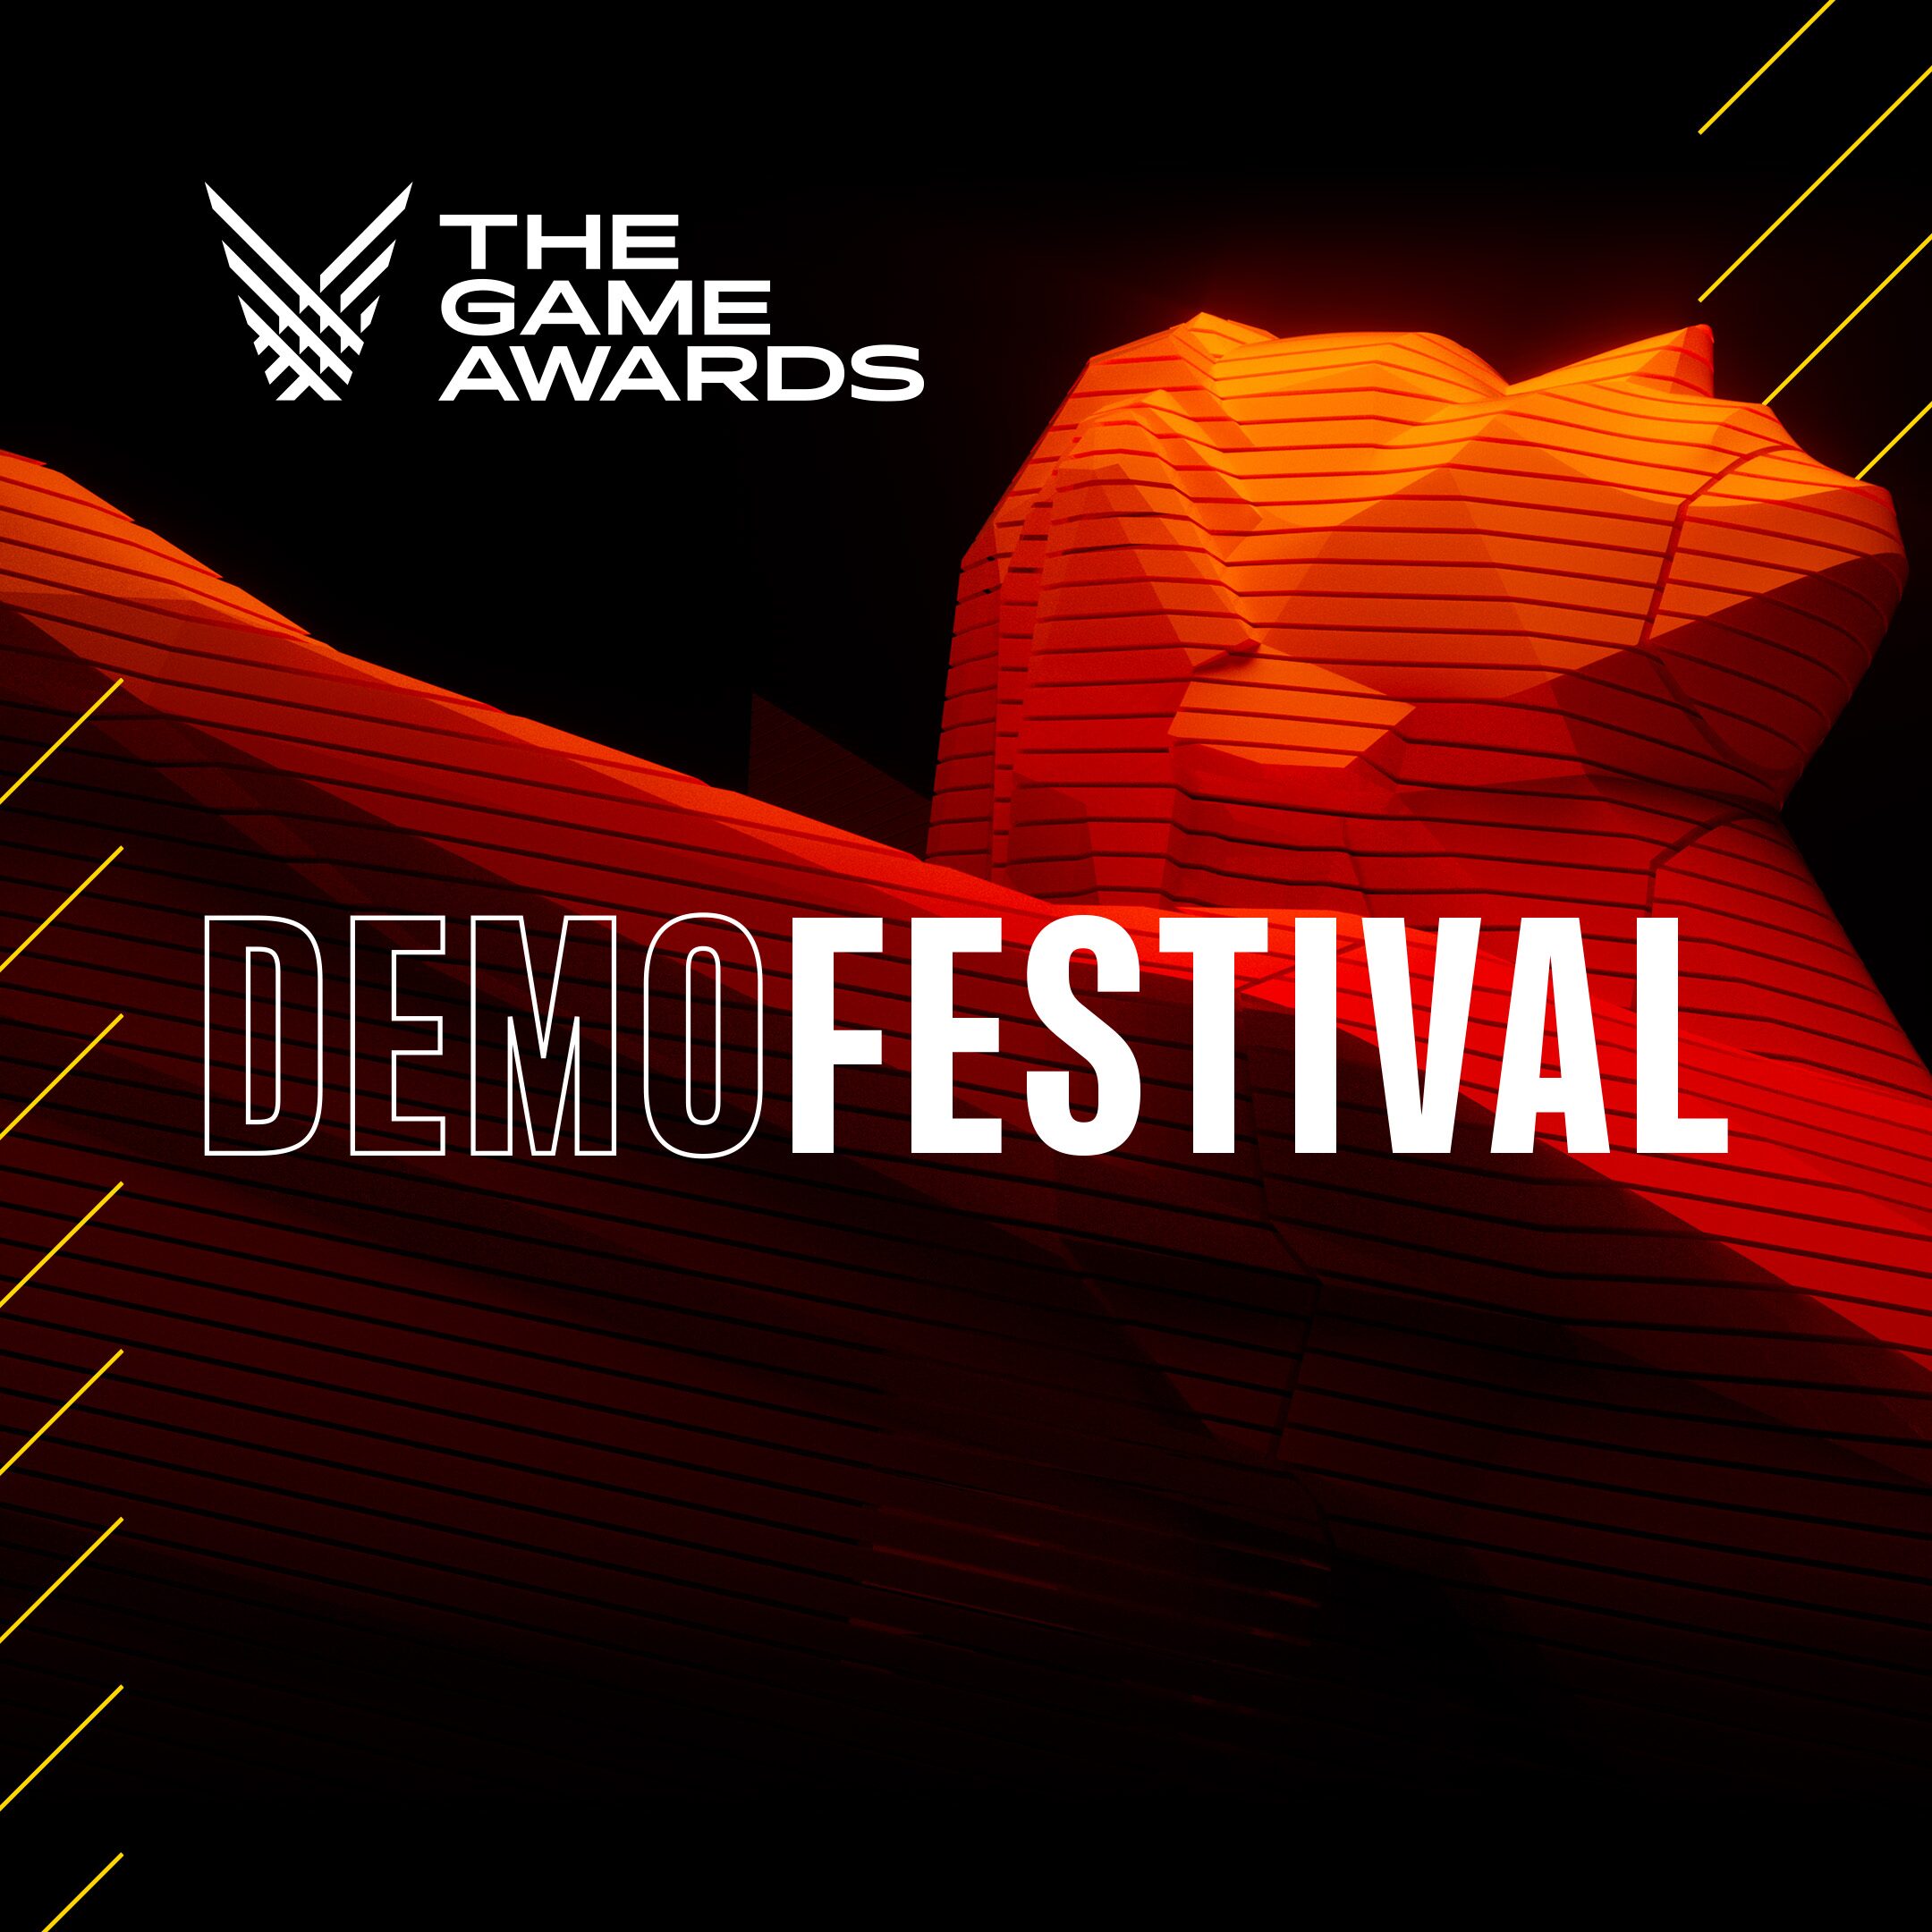 [PROMO] The Game Awards - Demo Festival